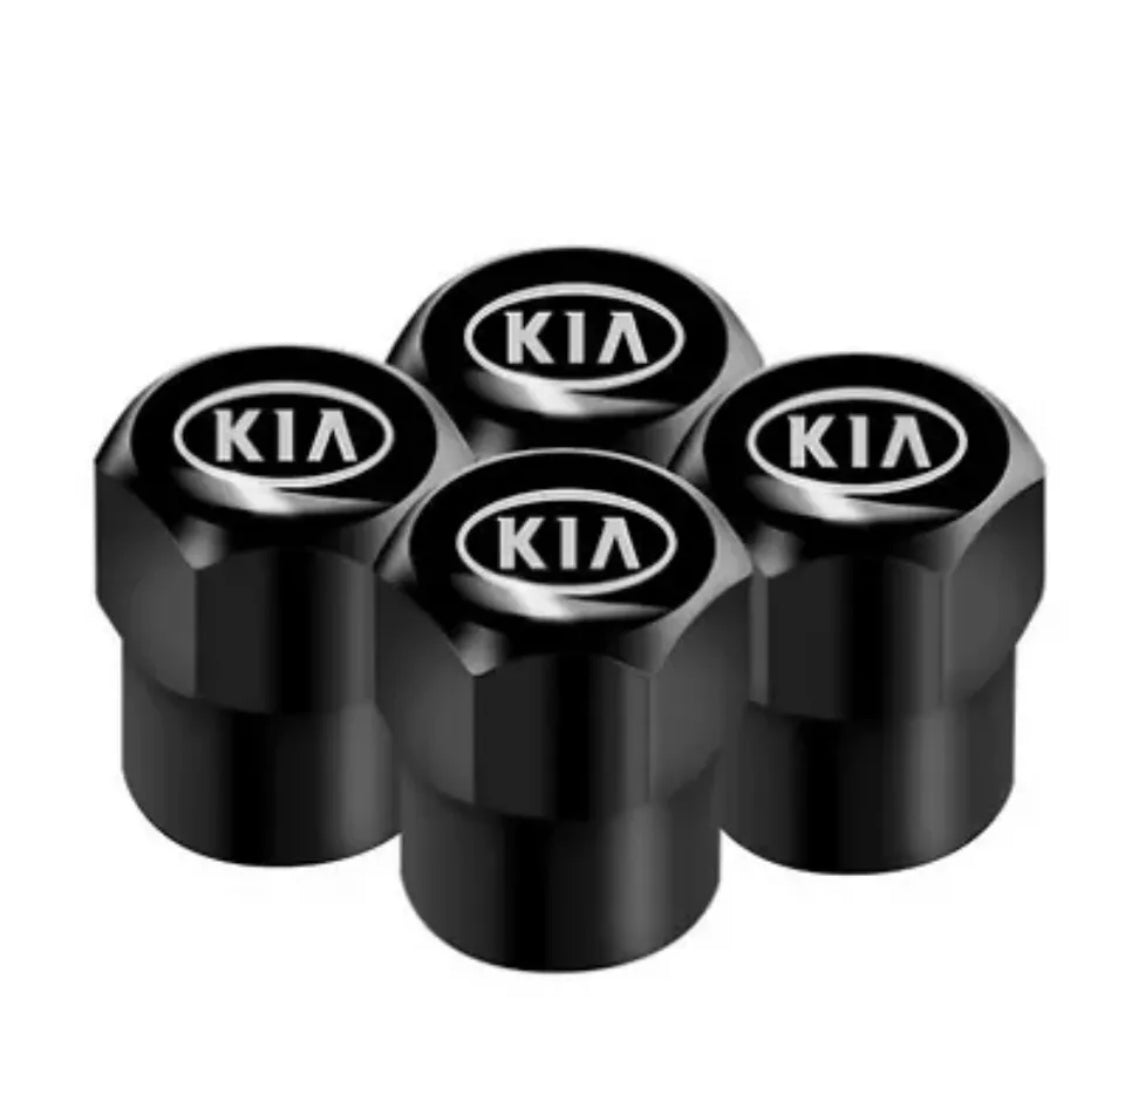 Kia Valve Caps - Black